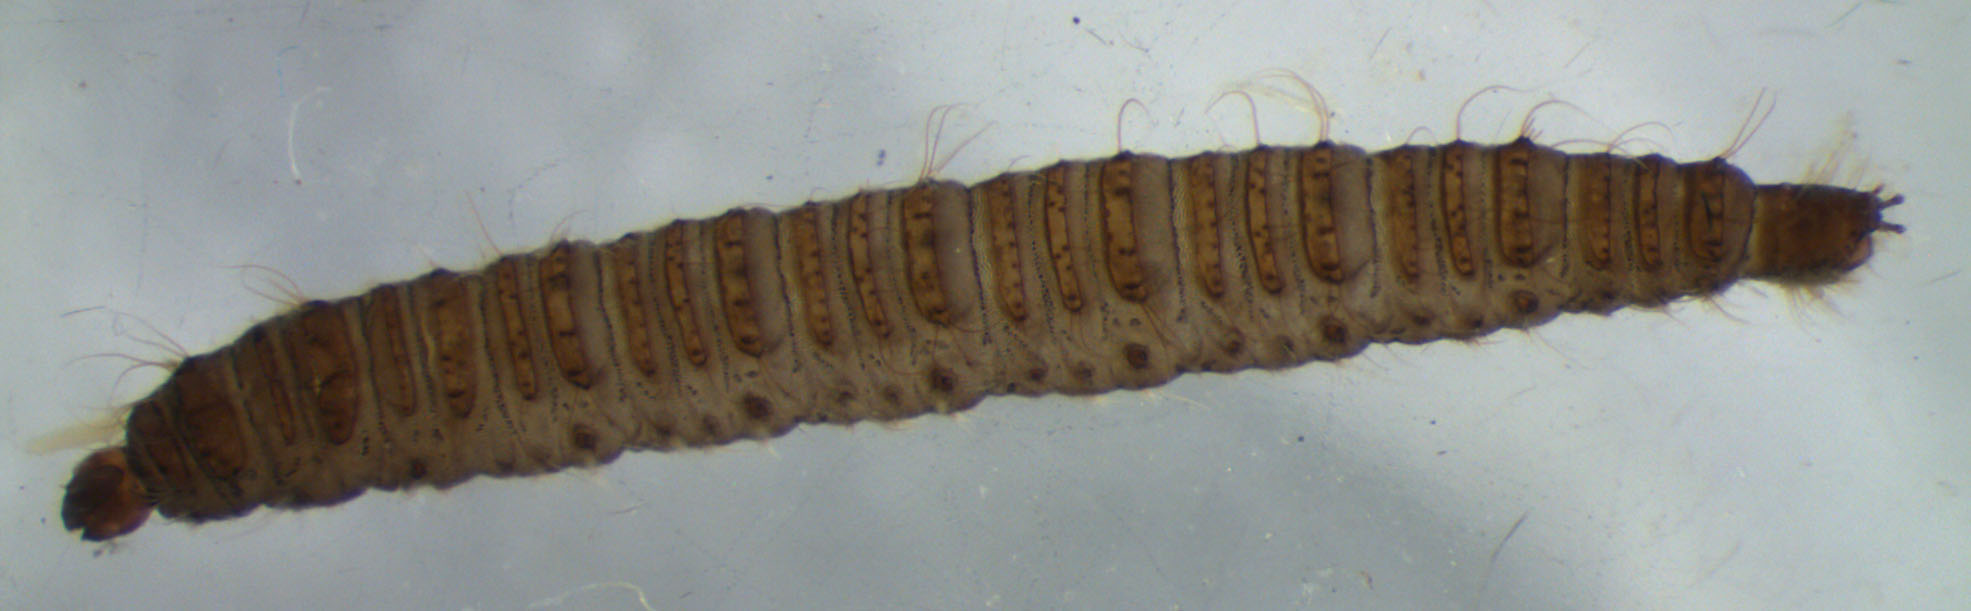 Aquatic Diptera Larvae